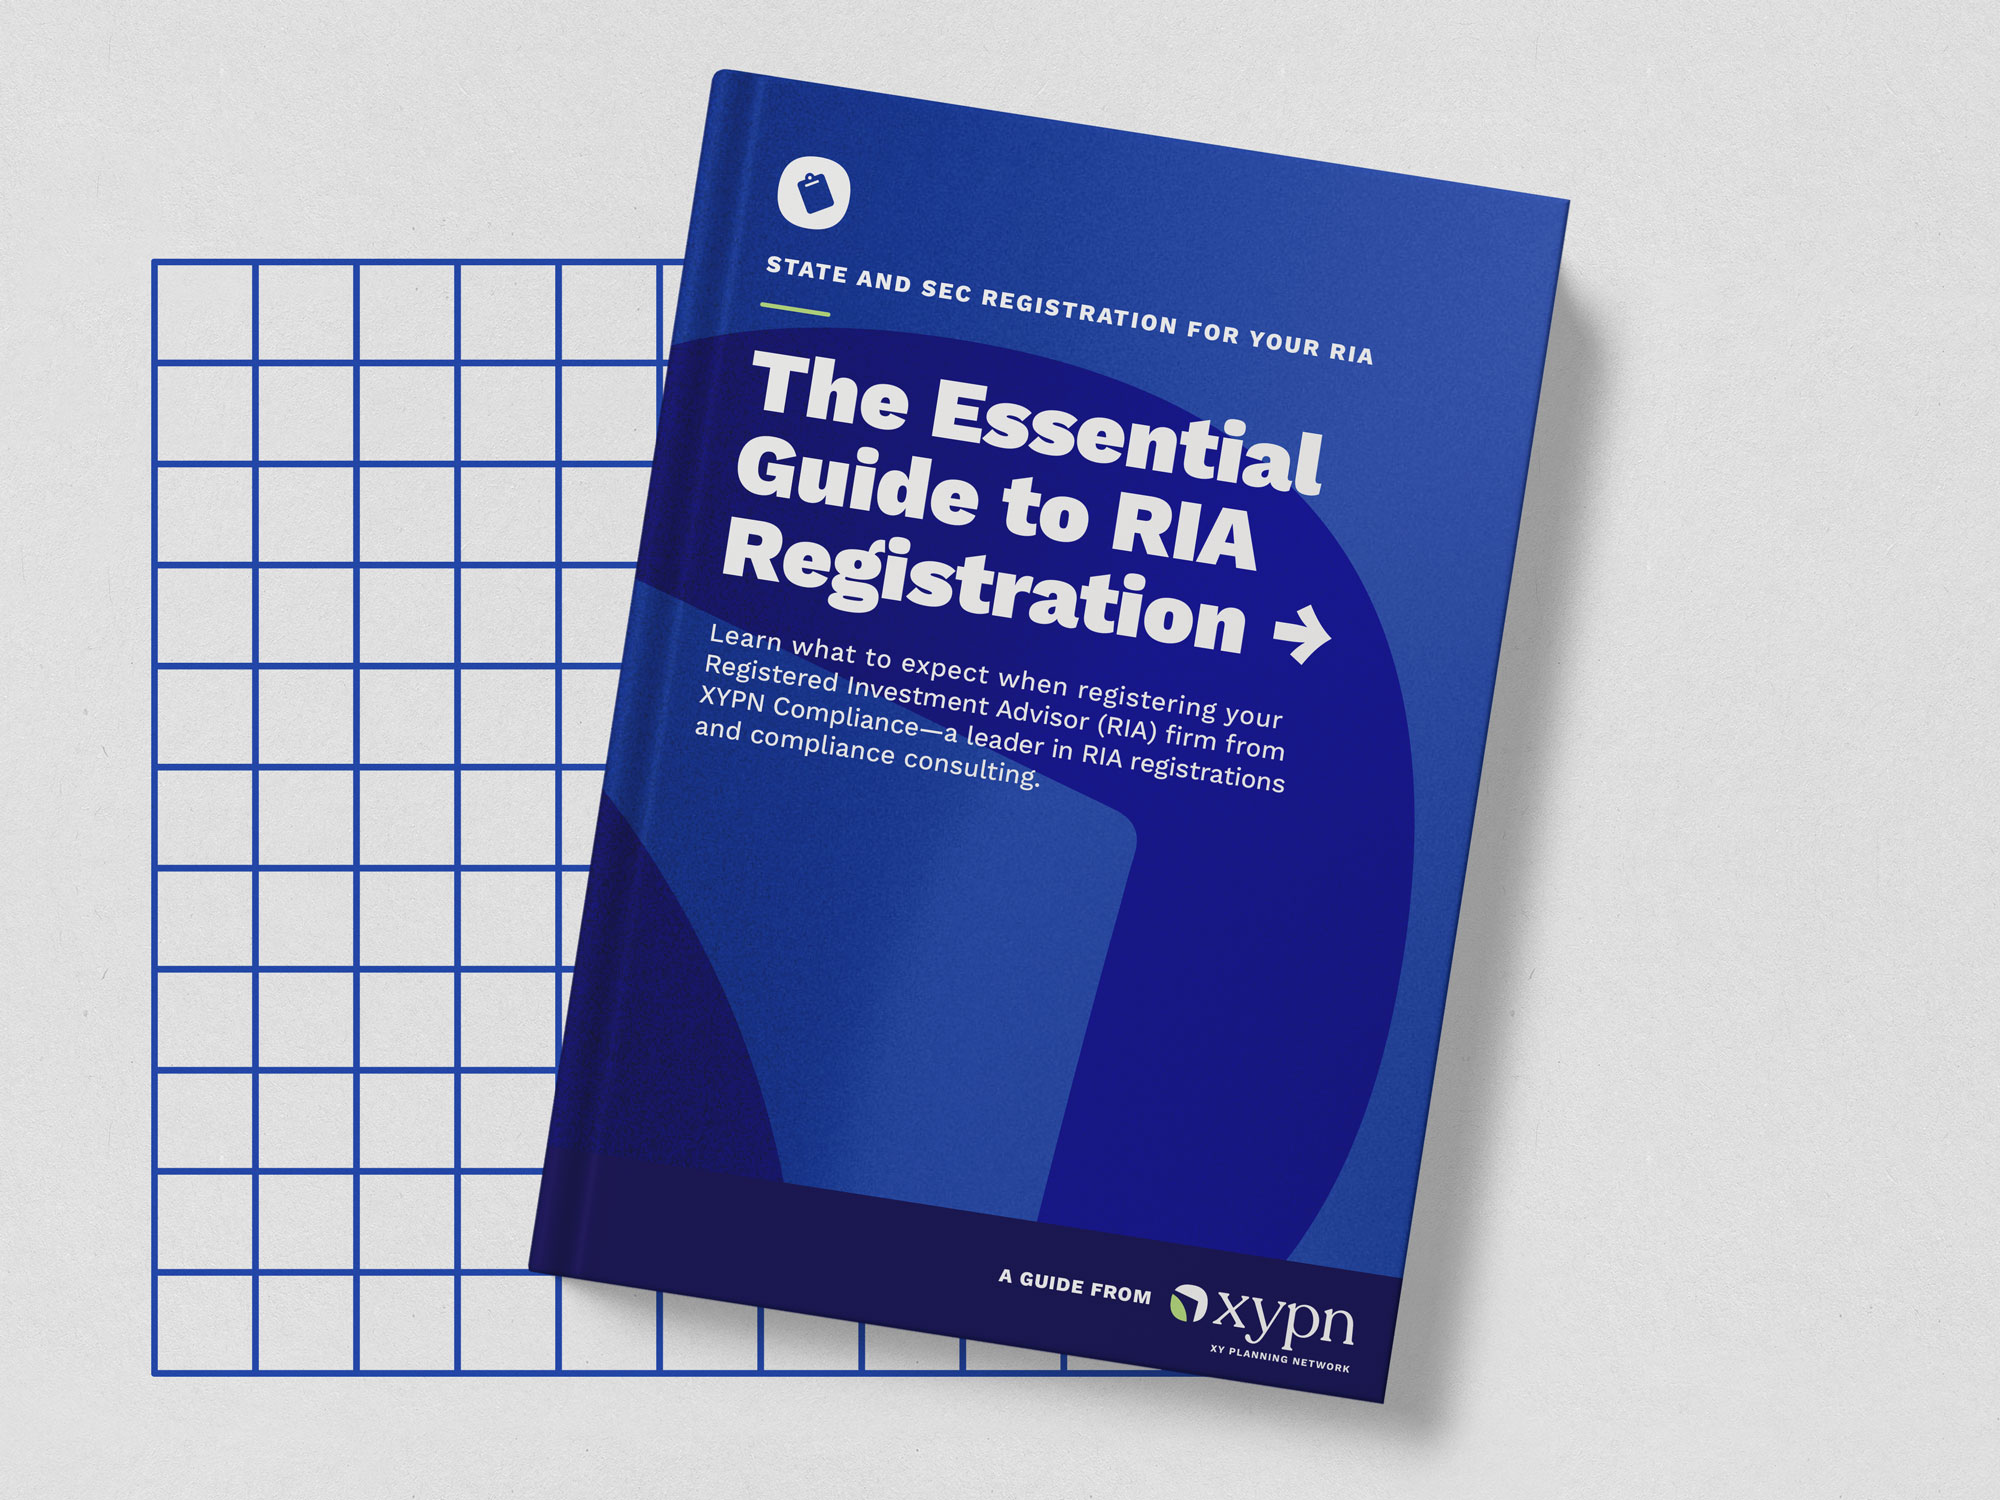 The Essential Guide to RIA Registration